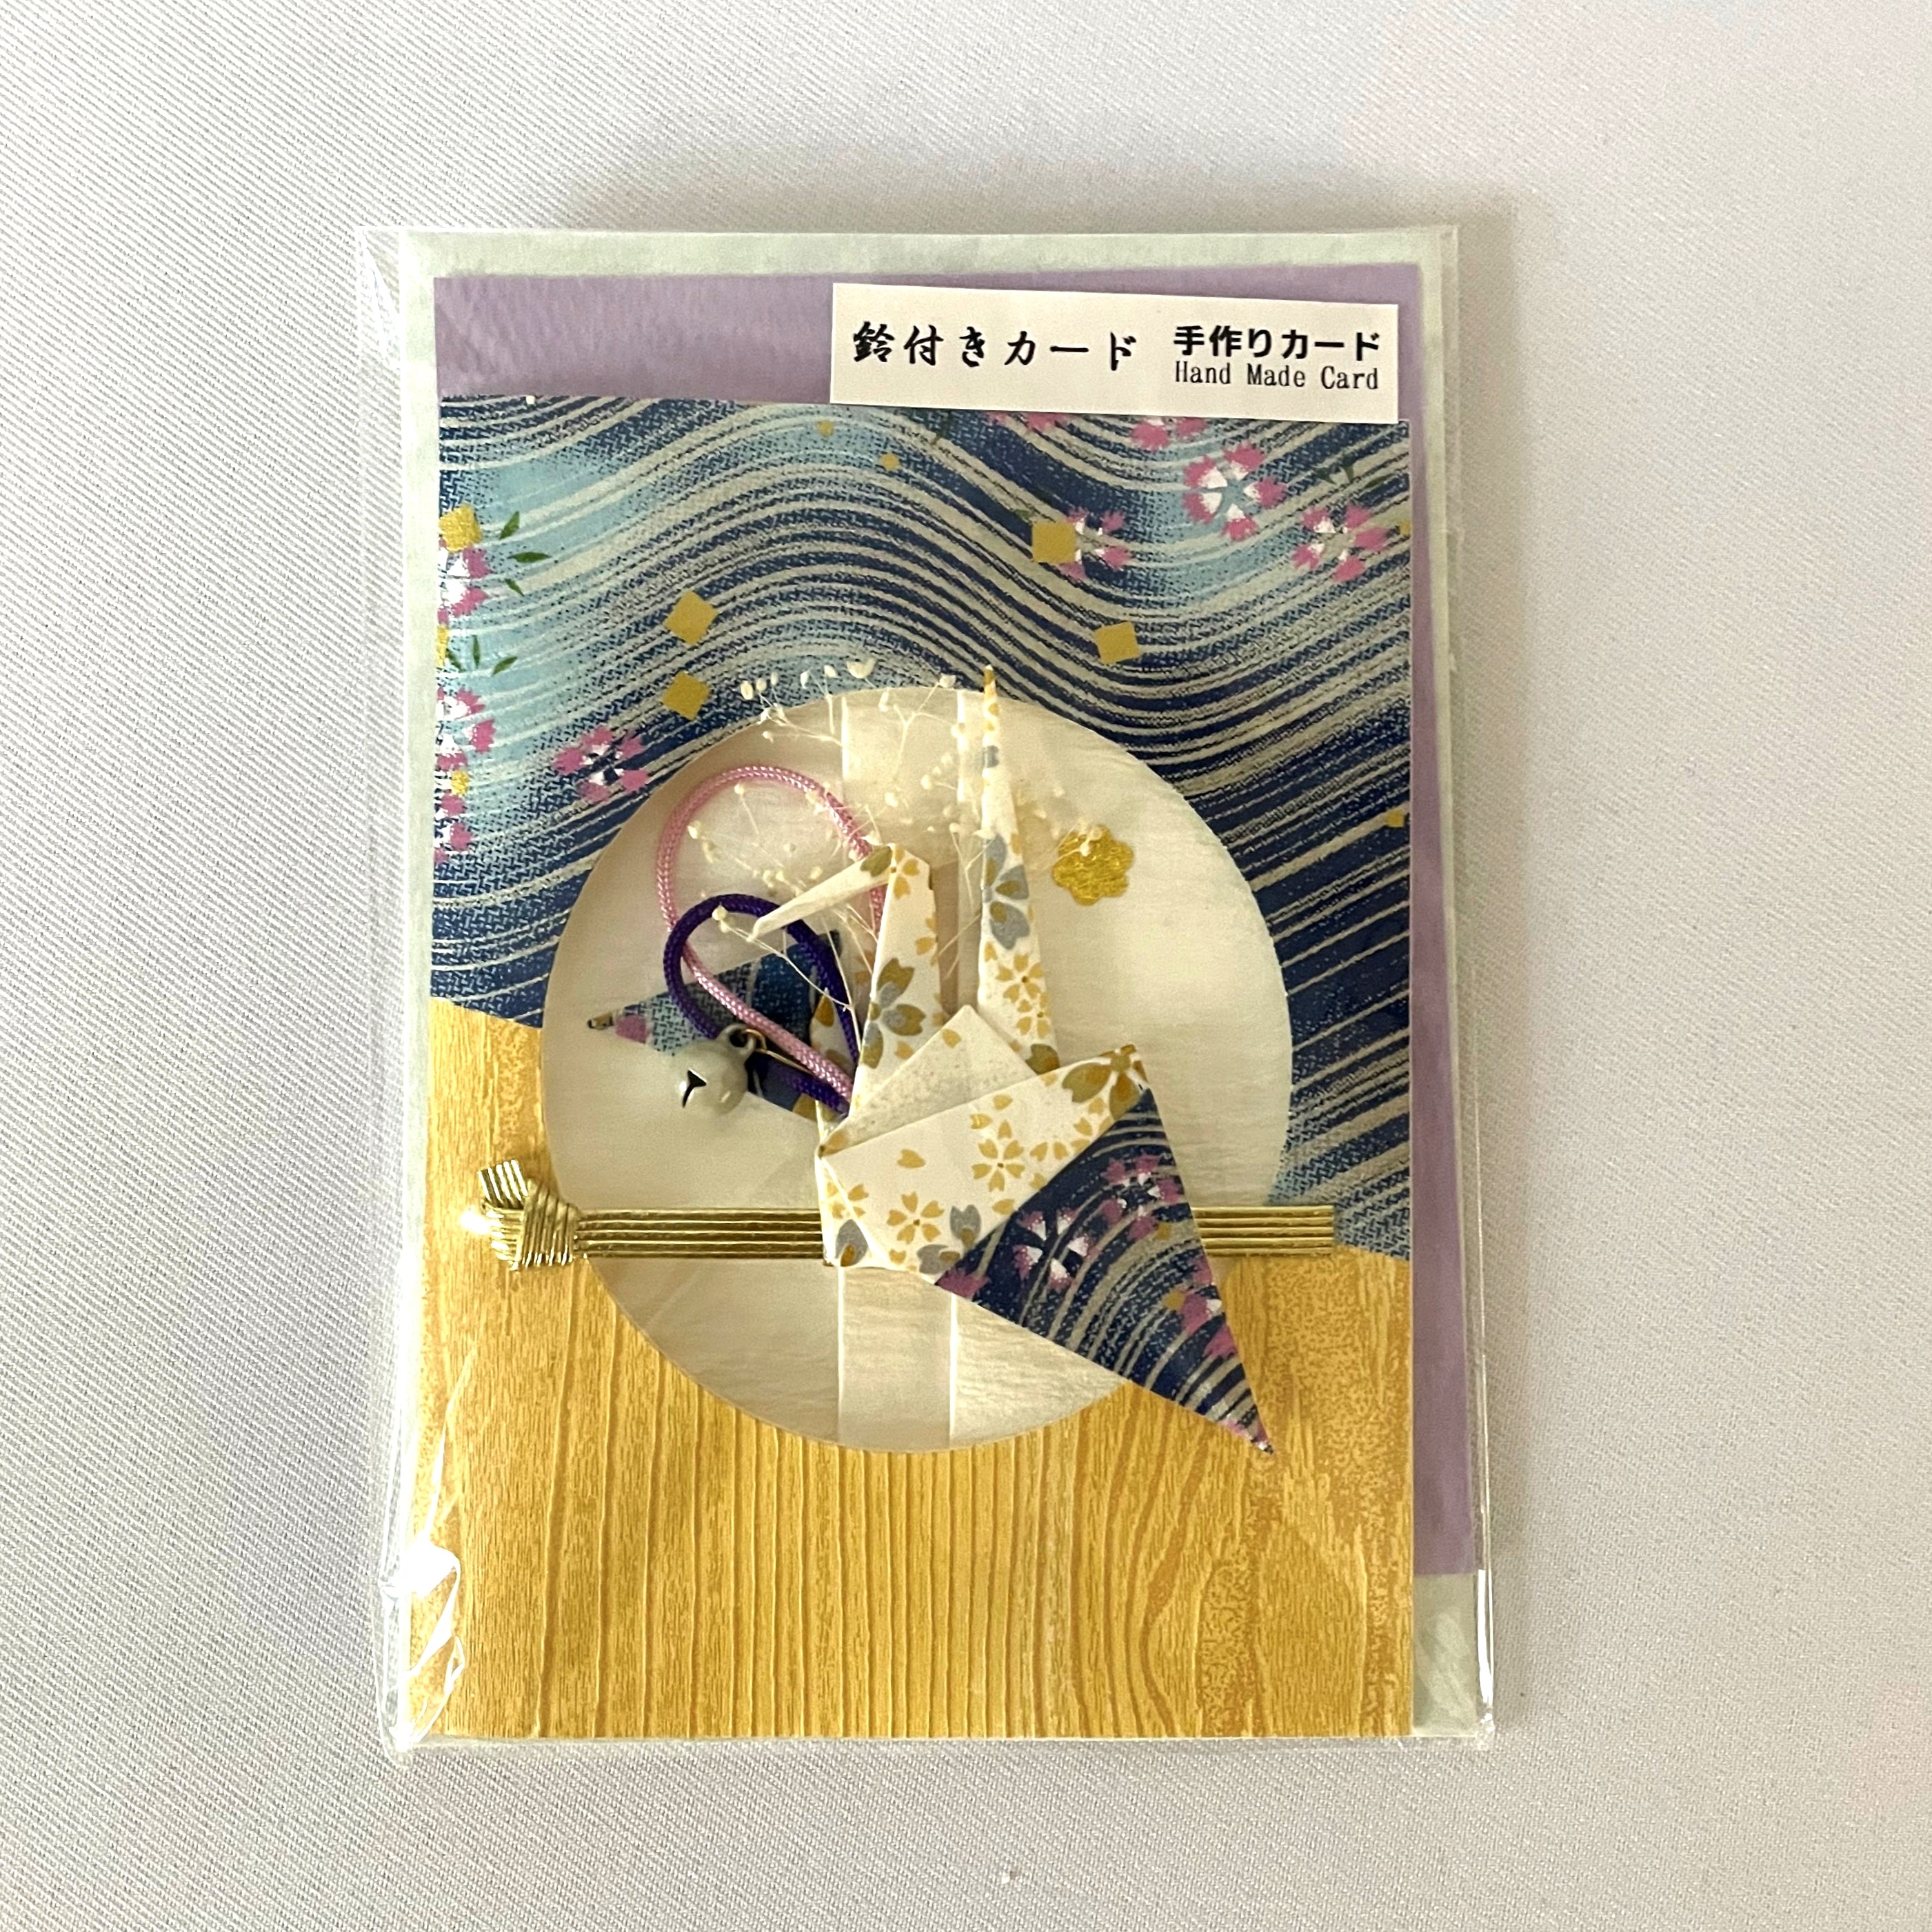 Handmade Greeting Card "Crane & Wave"